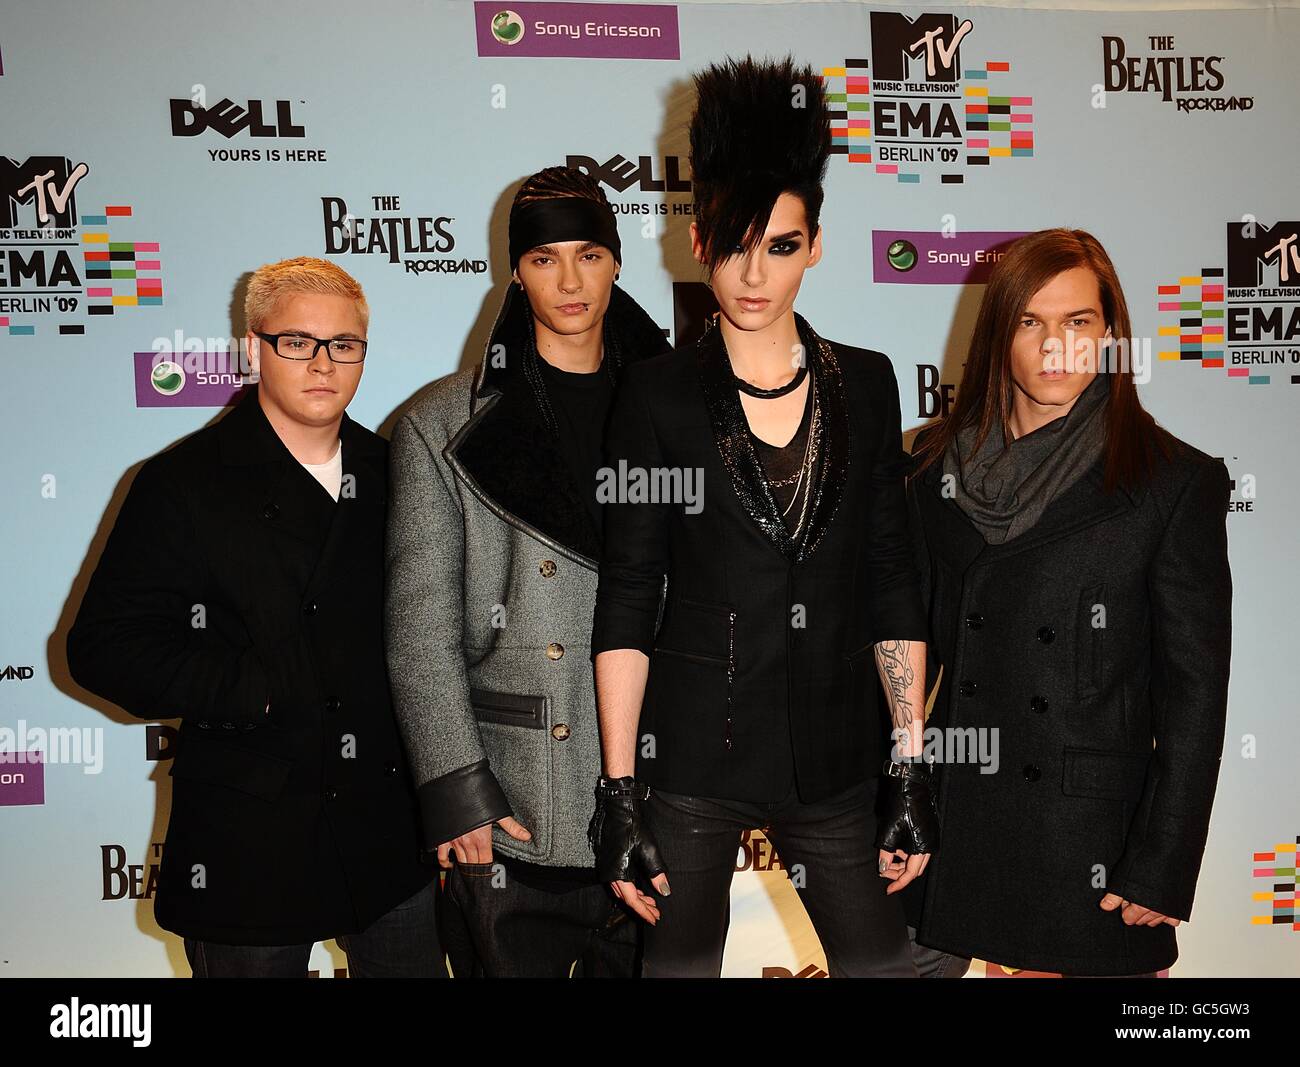 Tokio Hotel Plays 2 Songs at Berlin's Brandenburg Gate on New